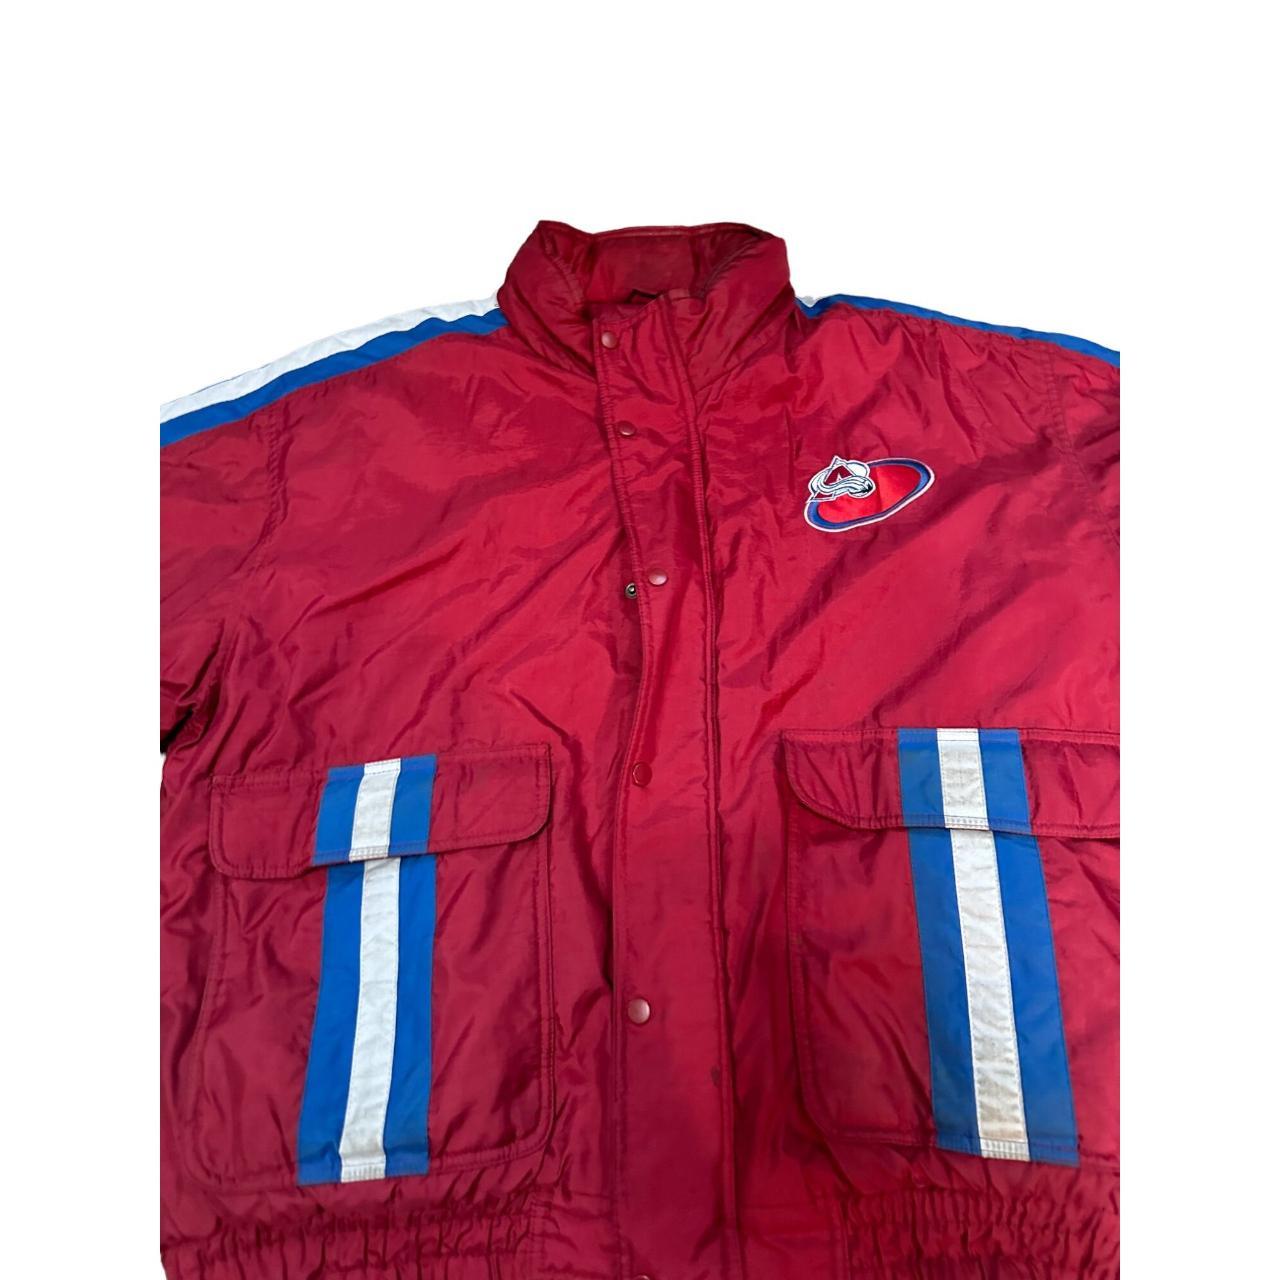 Vintage Colorado Avalanche Jacket Size Tag Washed - Depop